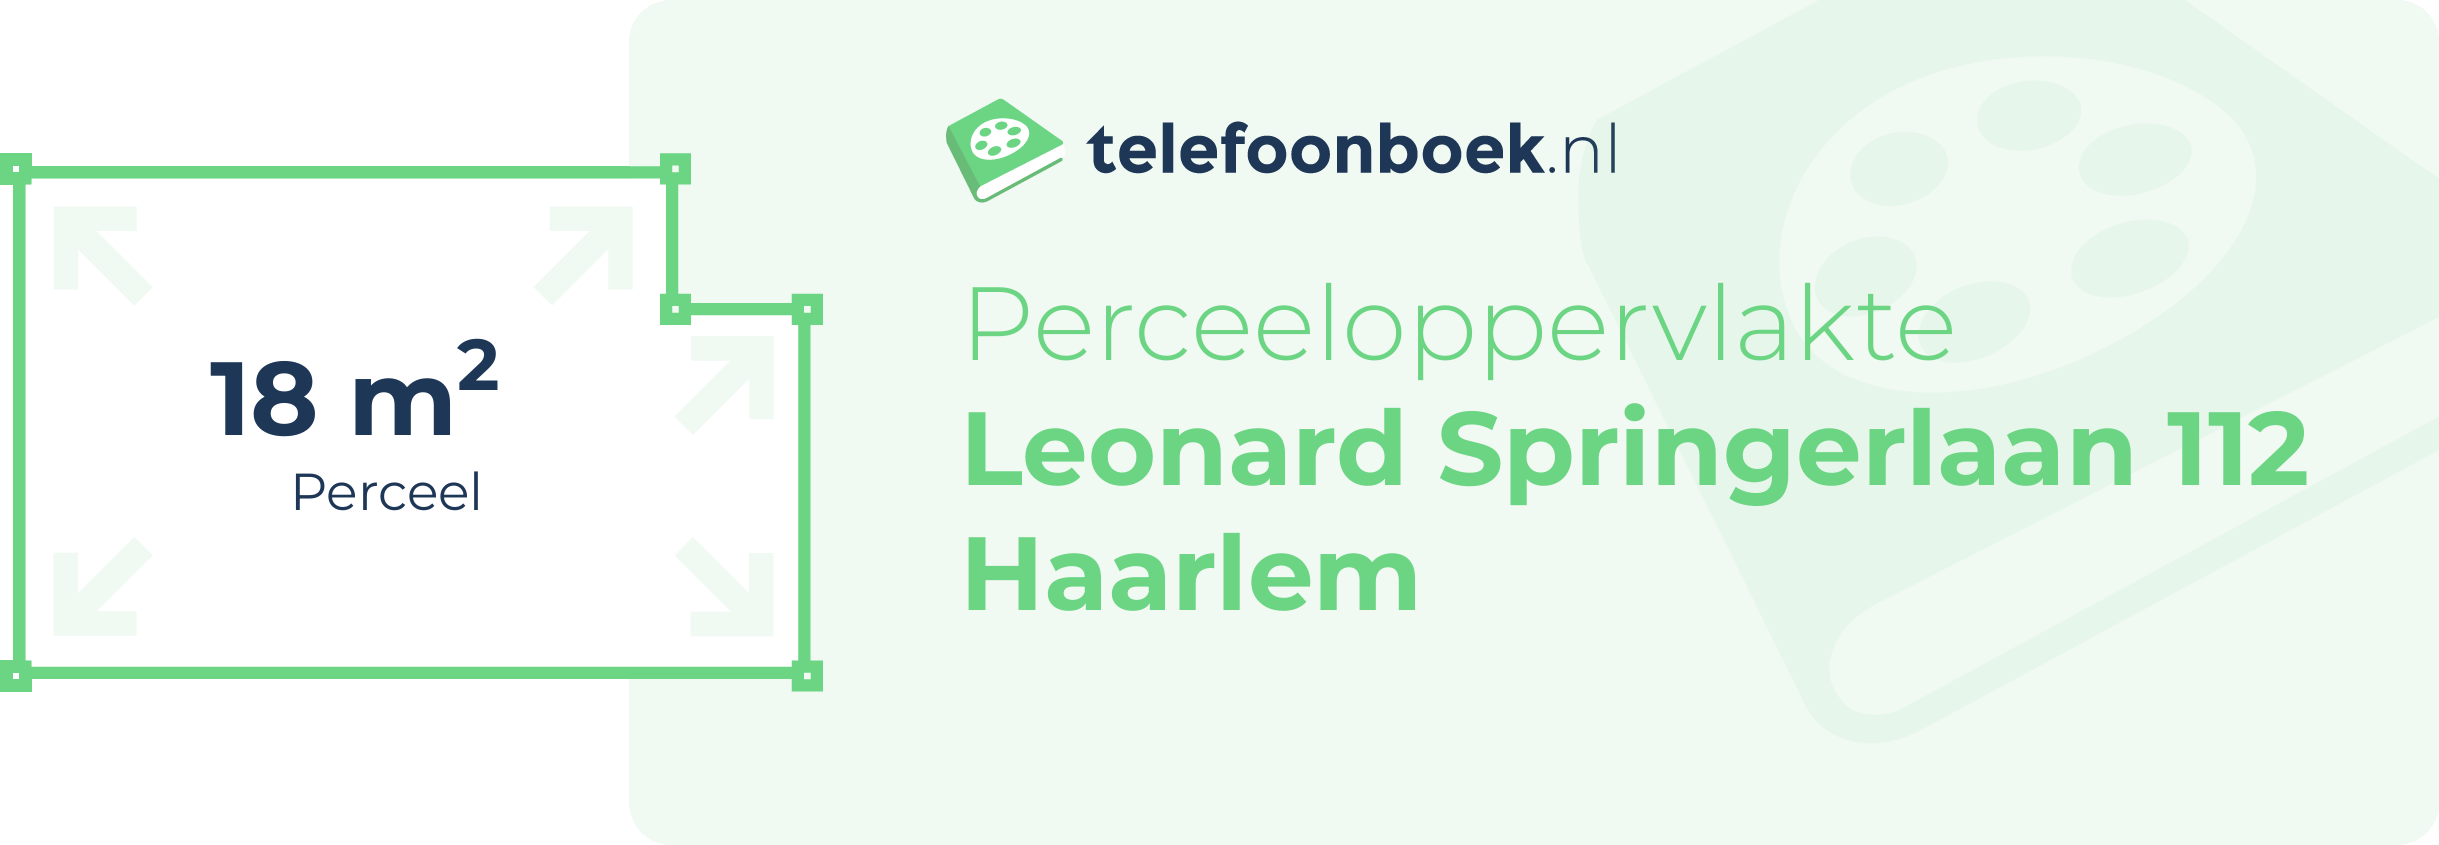 Perceeloppervlakte Leonard Springerlaan 112 Haarlem